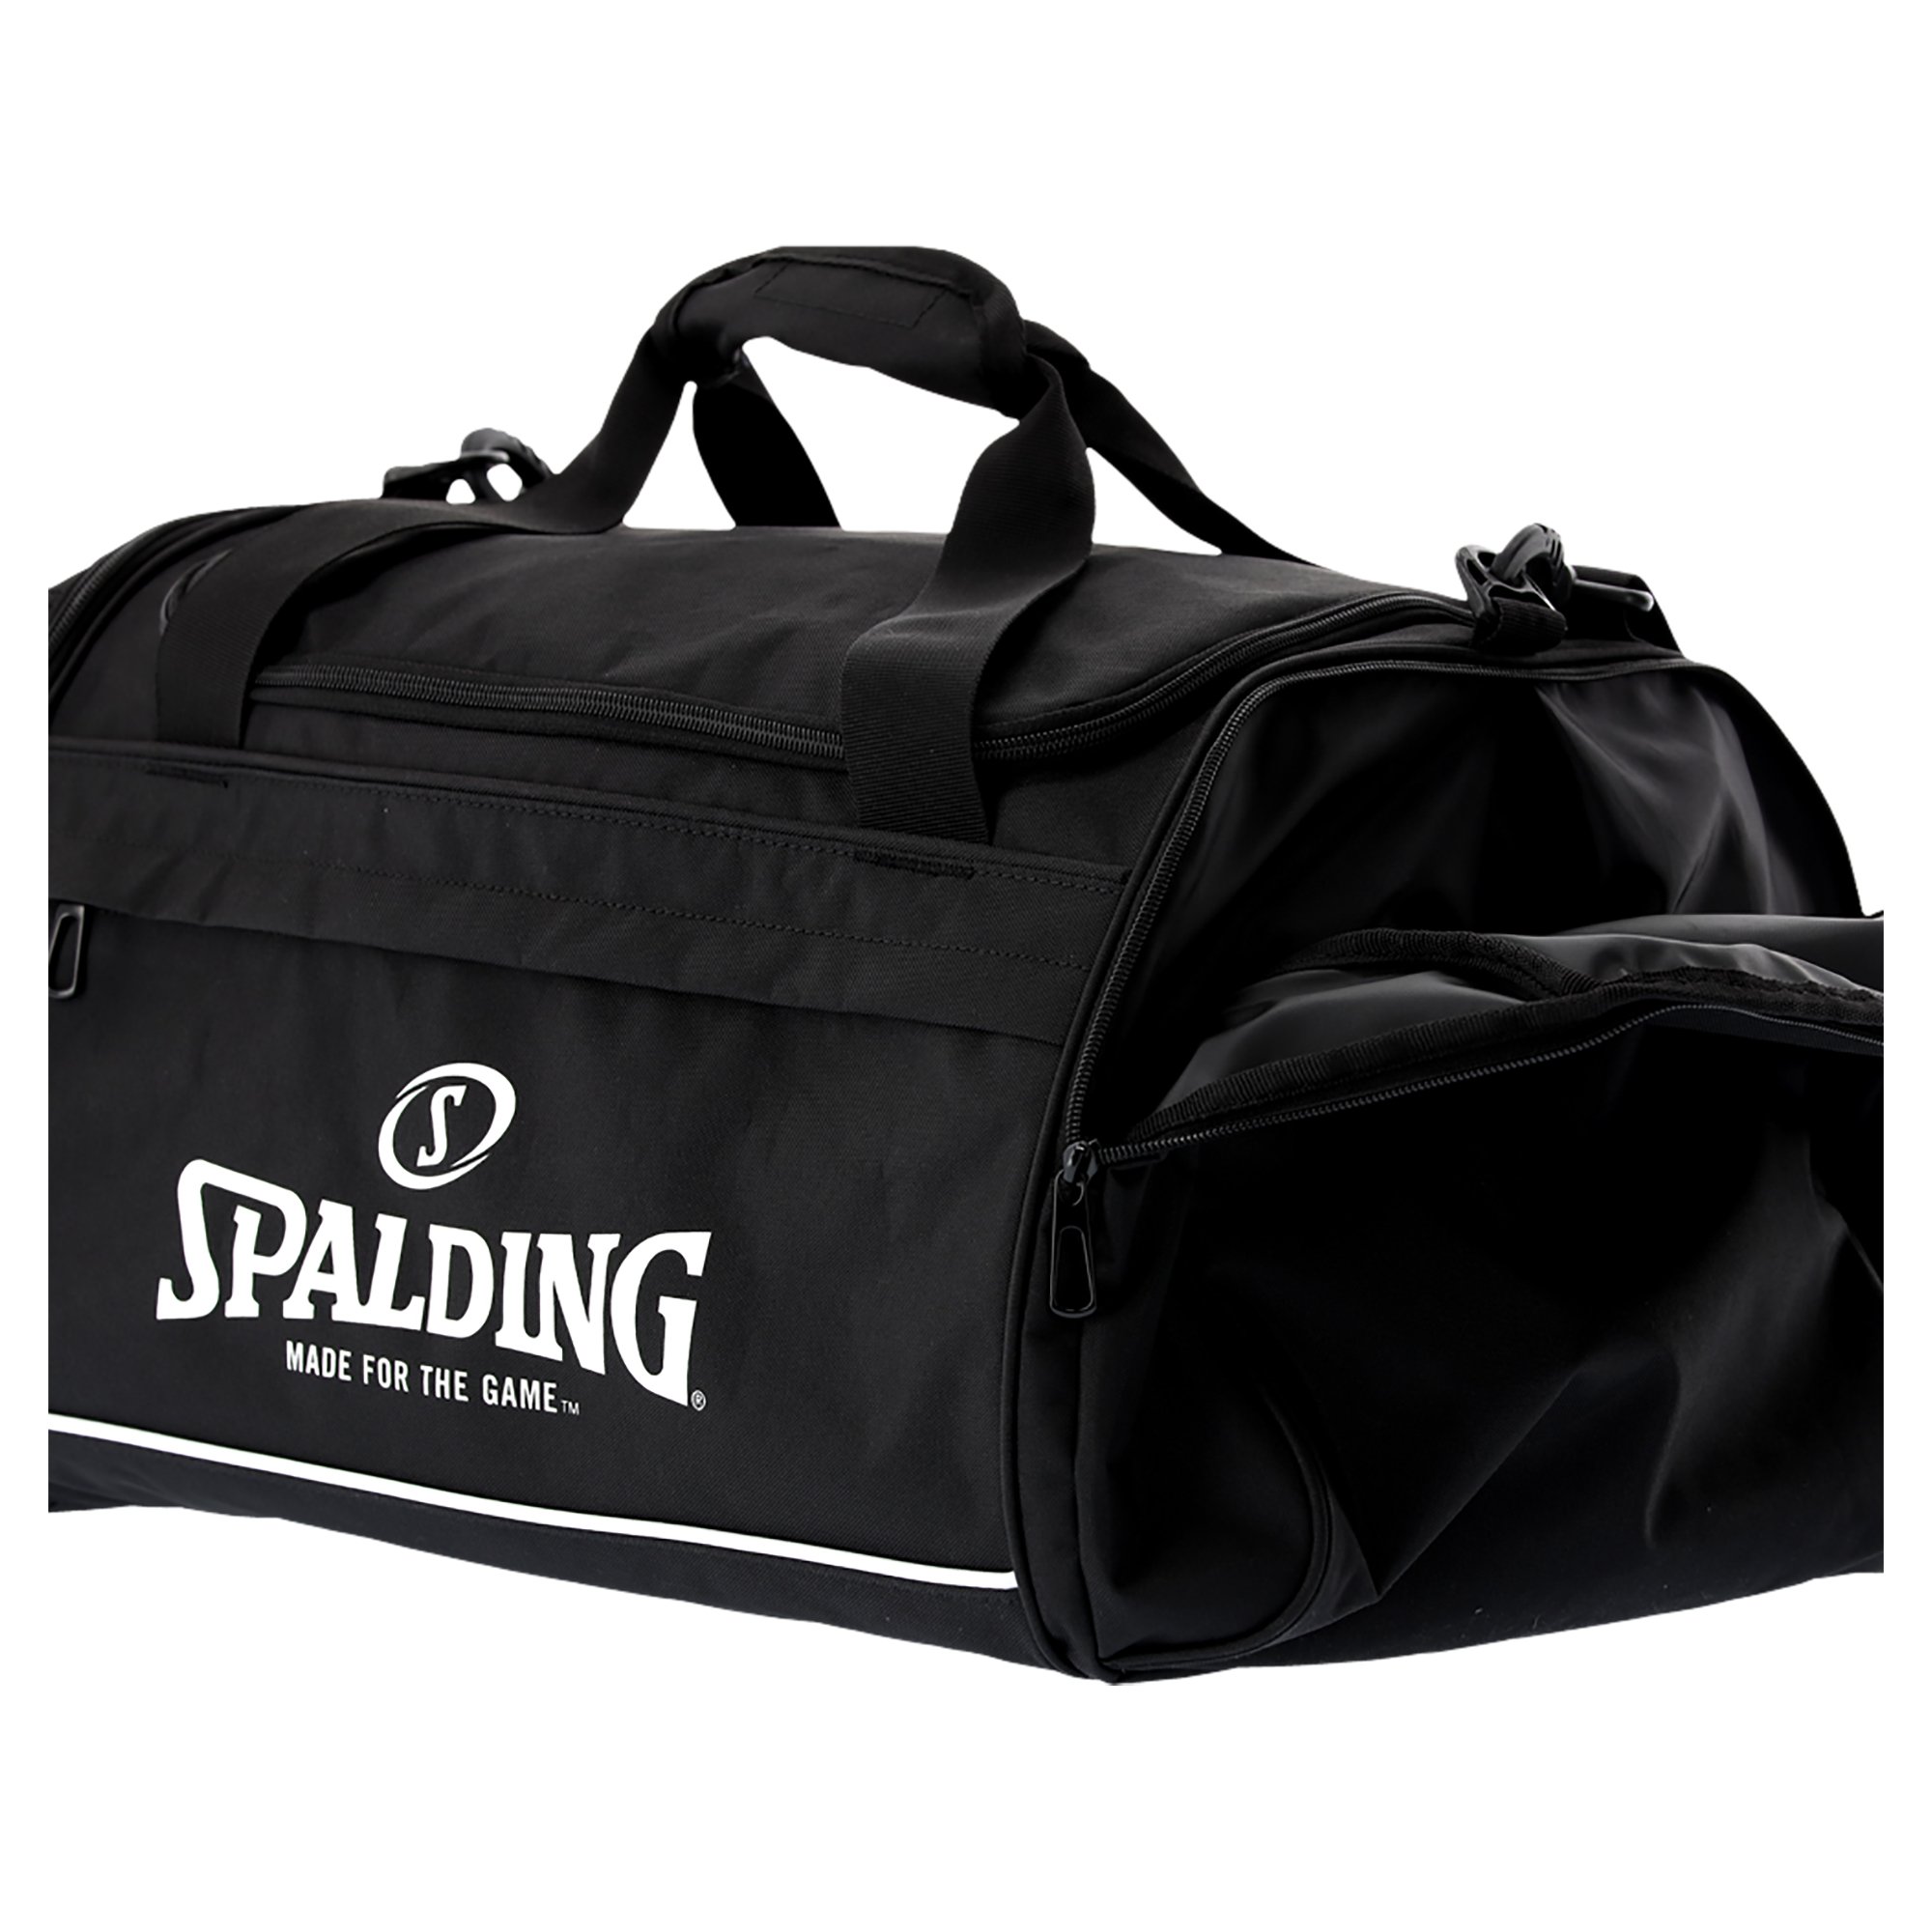 Spalding Team Bag Medium